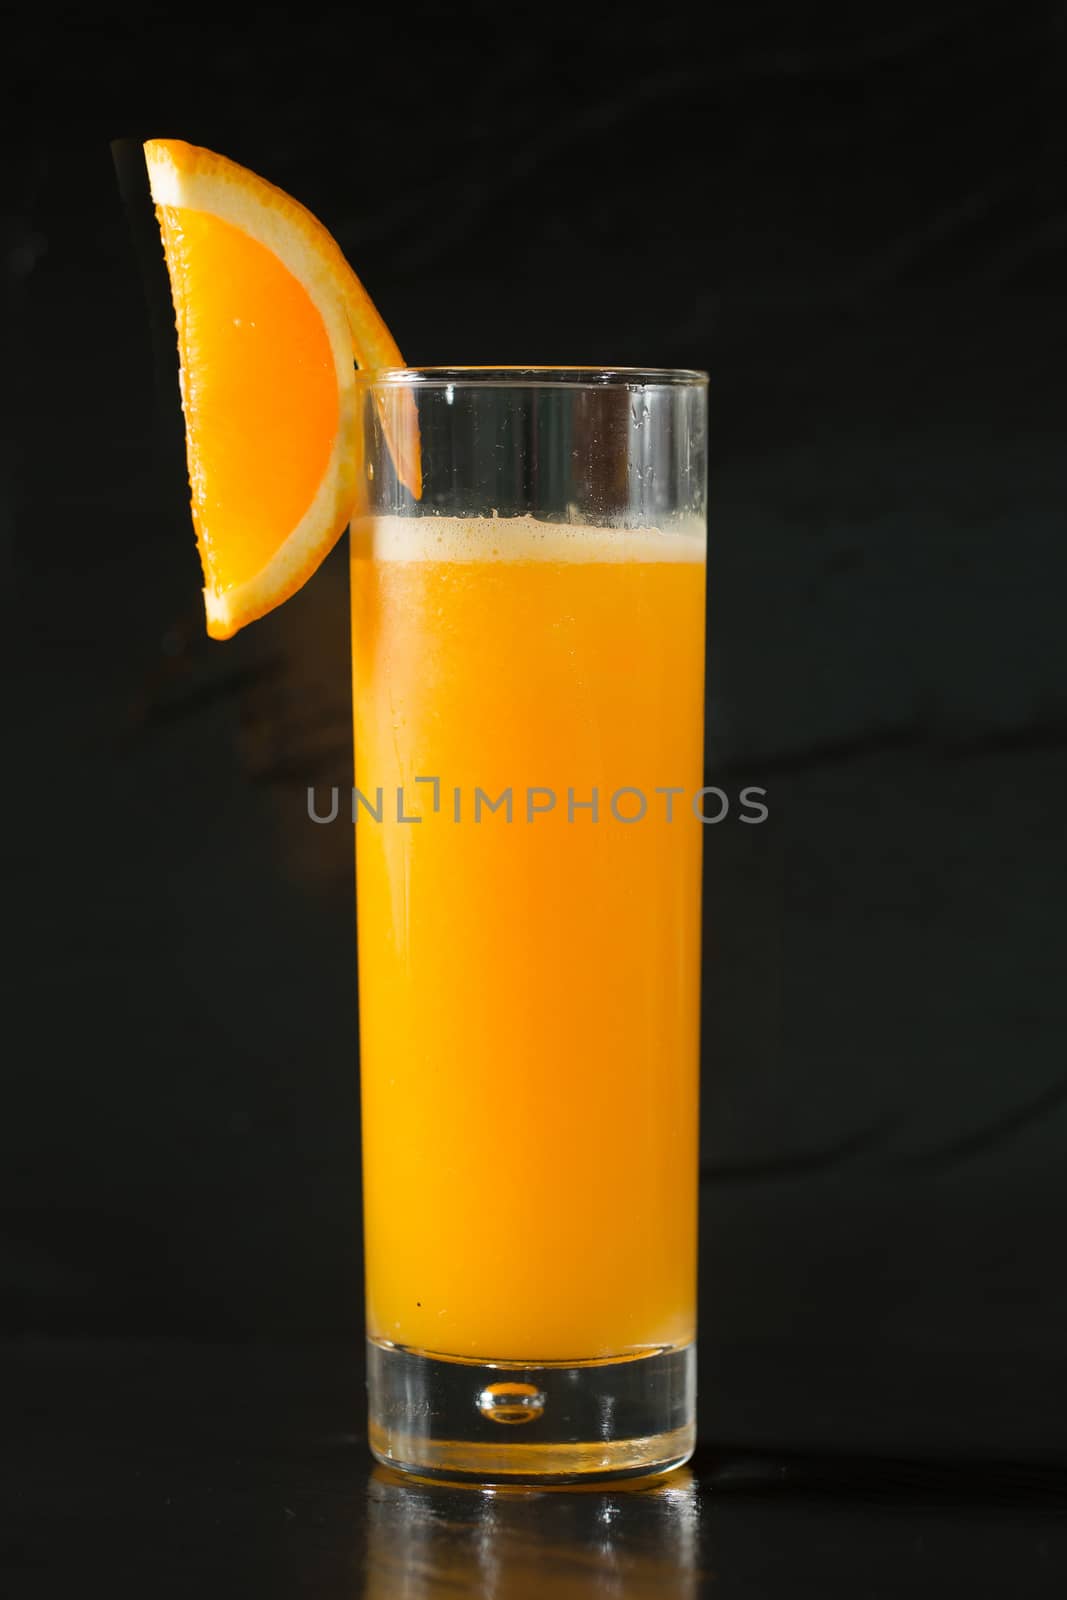 Glass of freshly pressed orange juice with sliced orange on black background